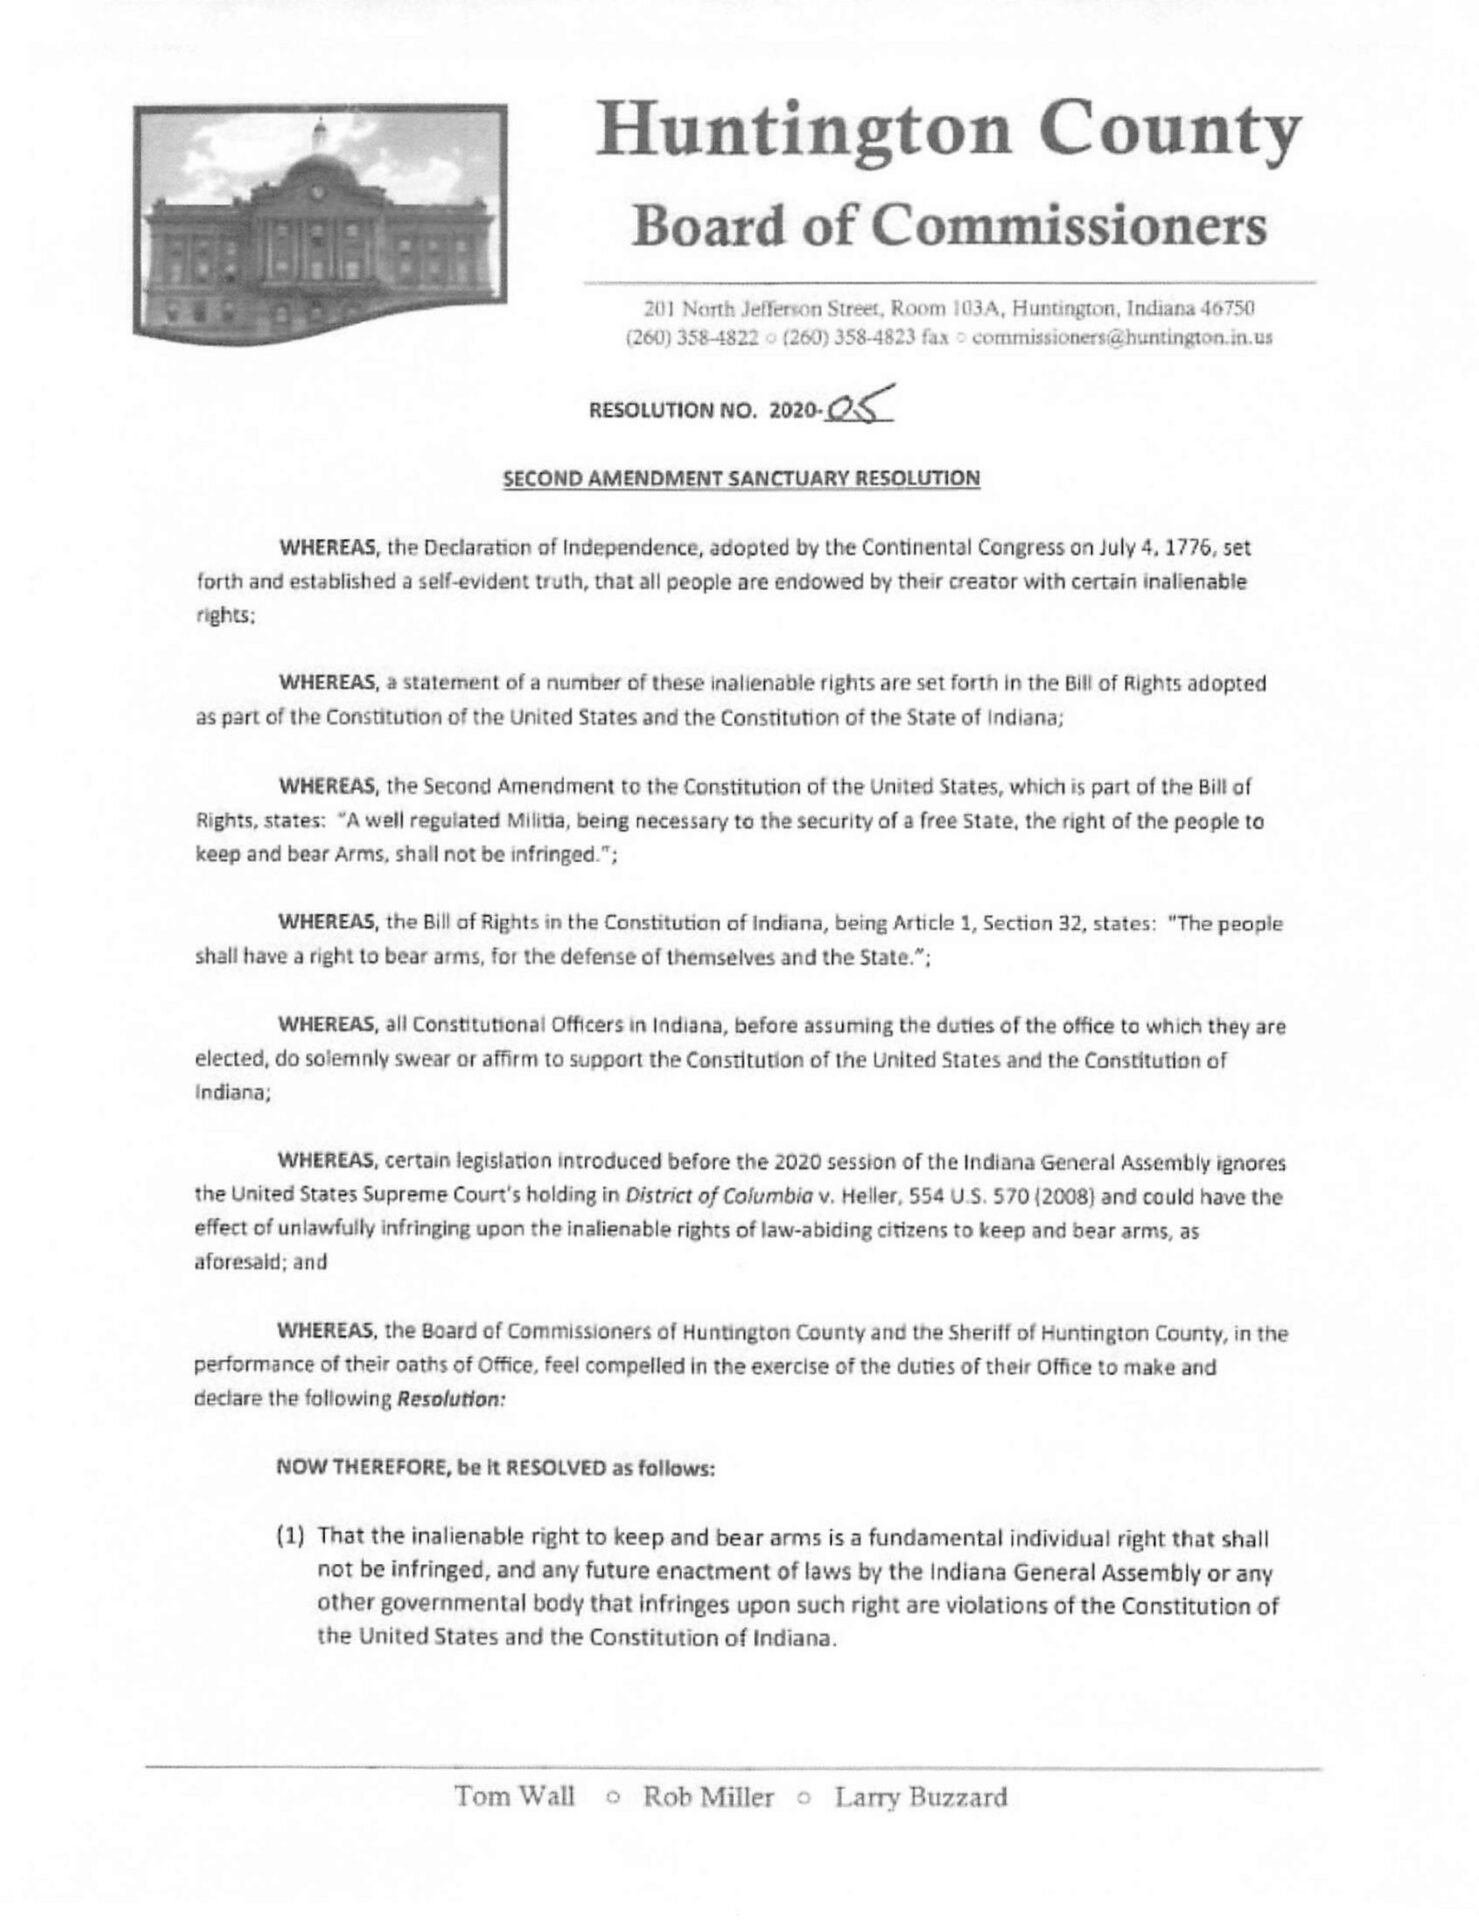 Huntington County Indiana Second Amendment Sanctuary Resolution pg 1